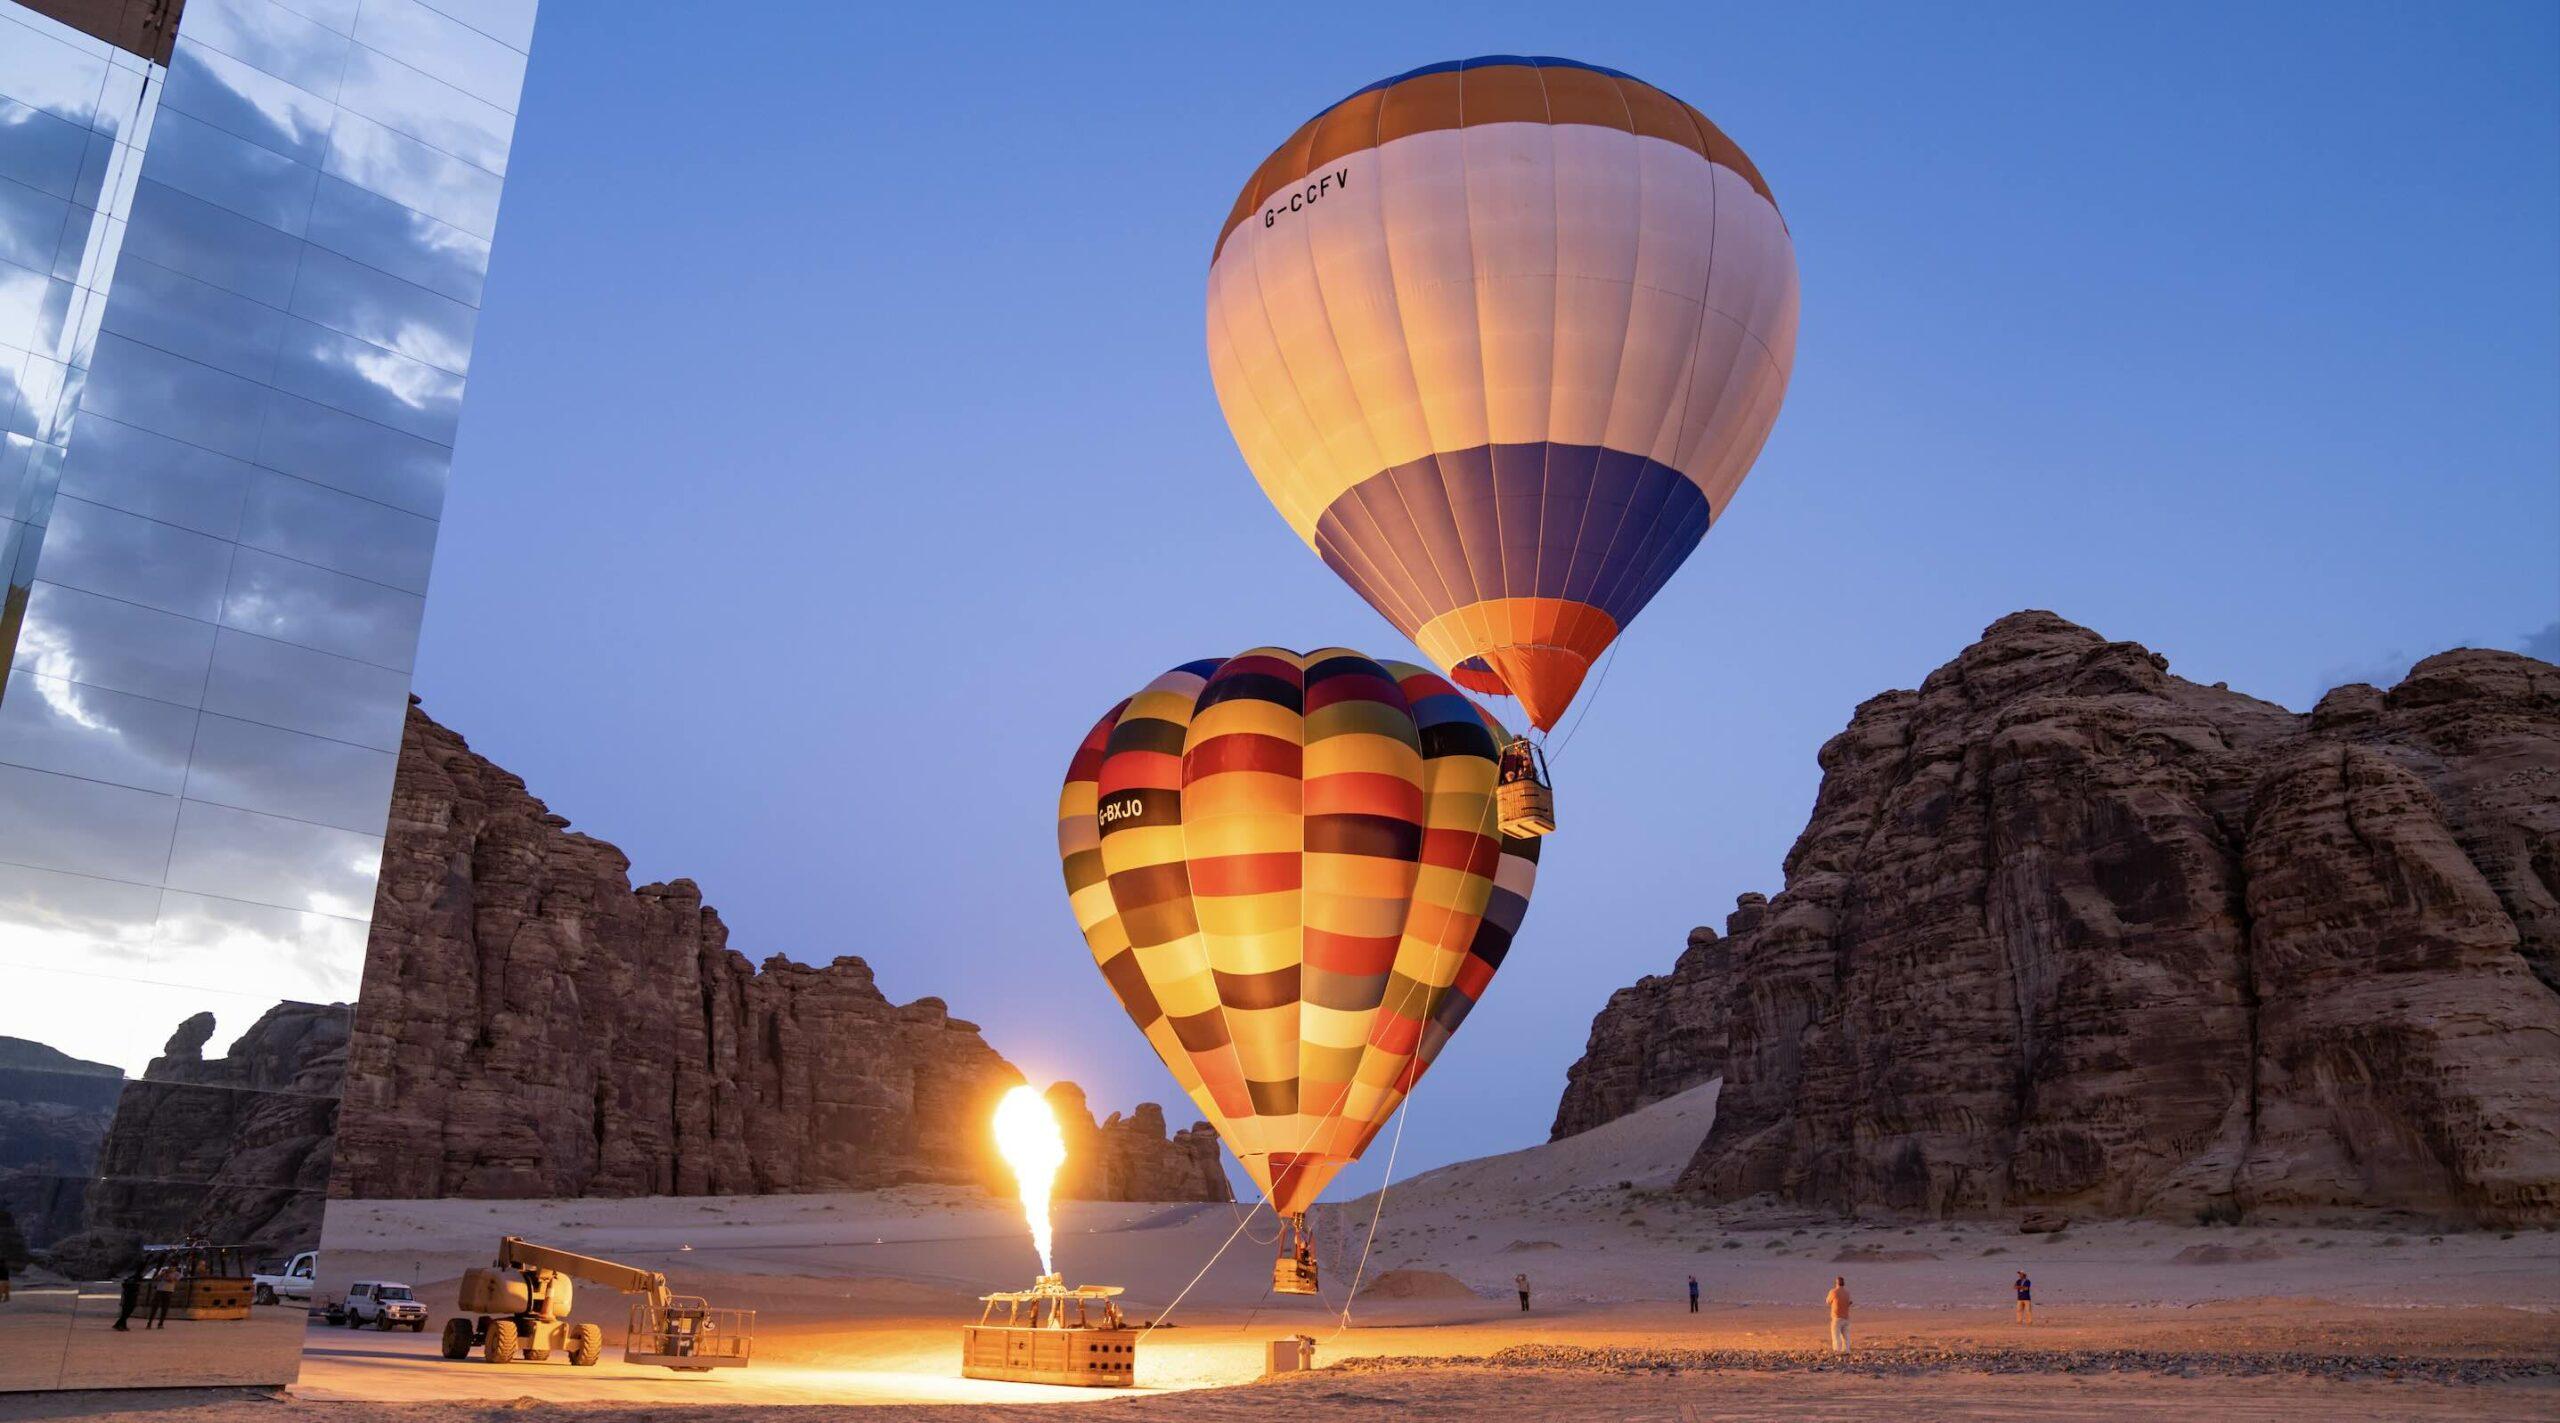 Hero Balloon Flights is now soaring over AlUla